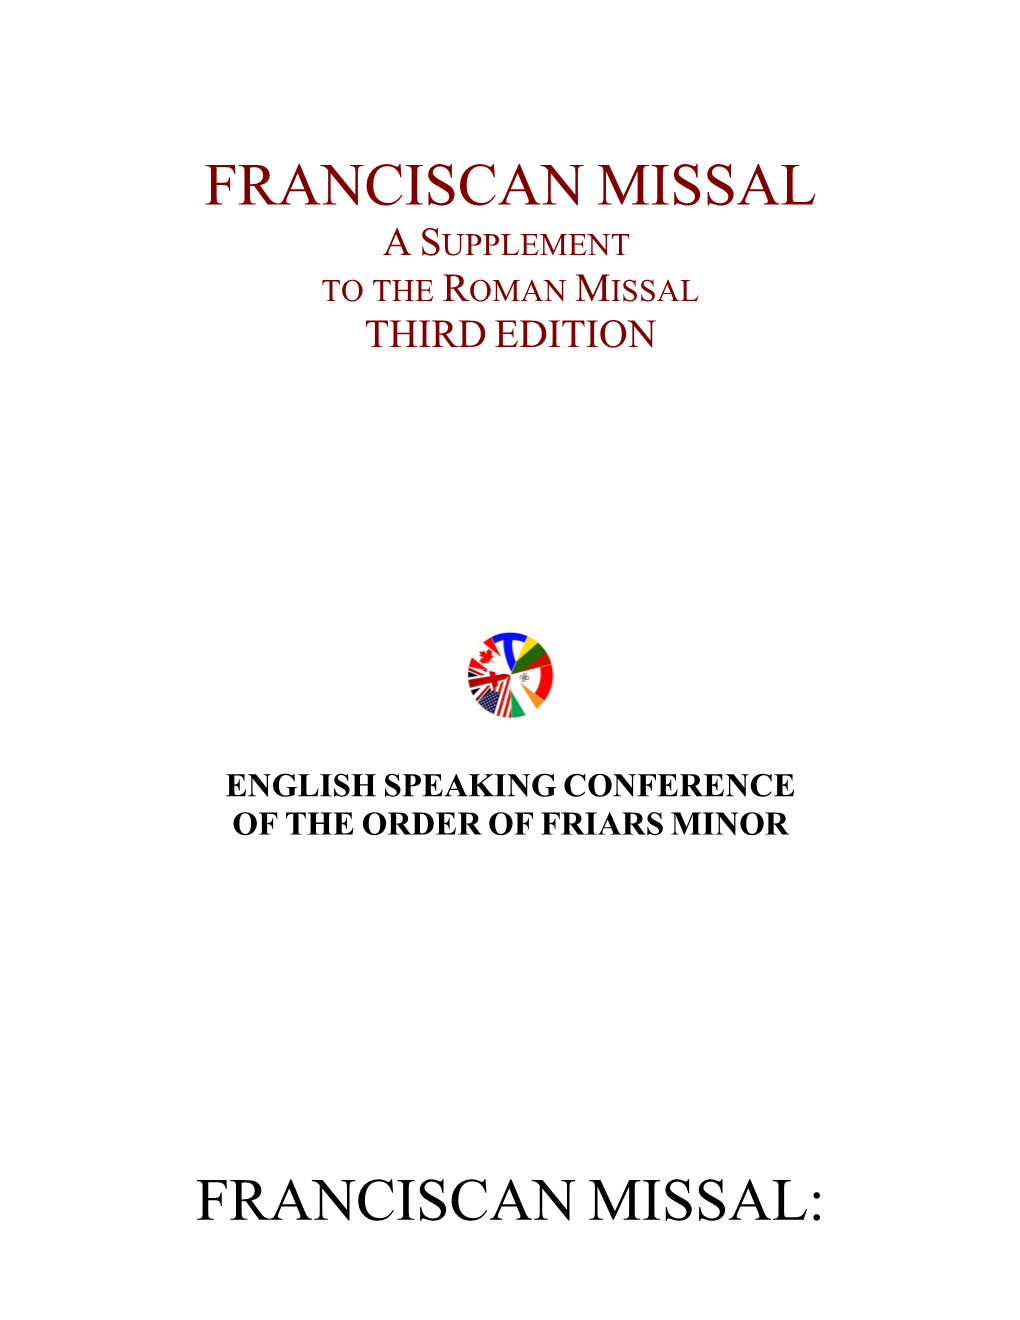 Franciscan Missal Franciscan Missal